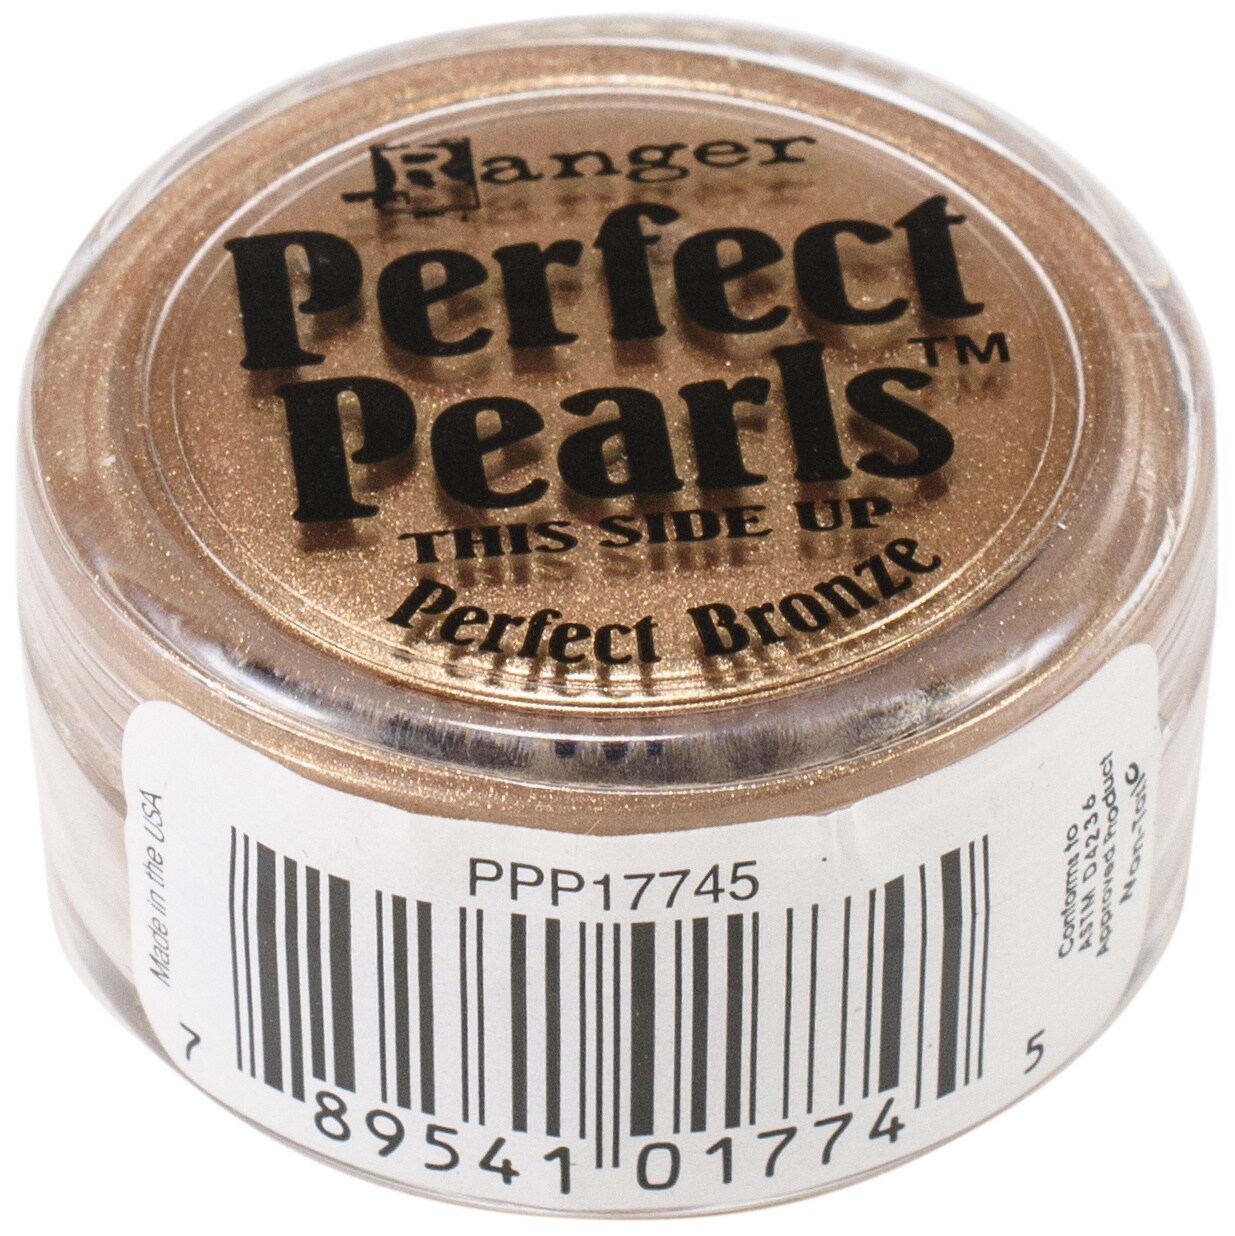 Ranger Perfect Pearls Pigment Powder .25oz-Bronze